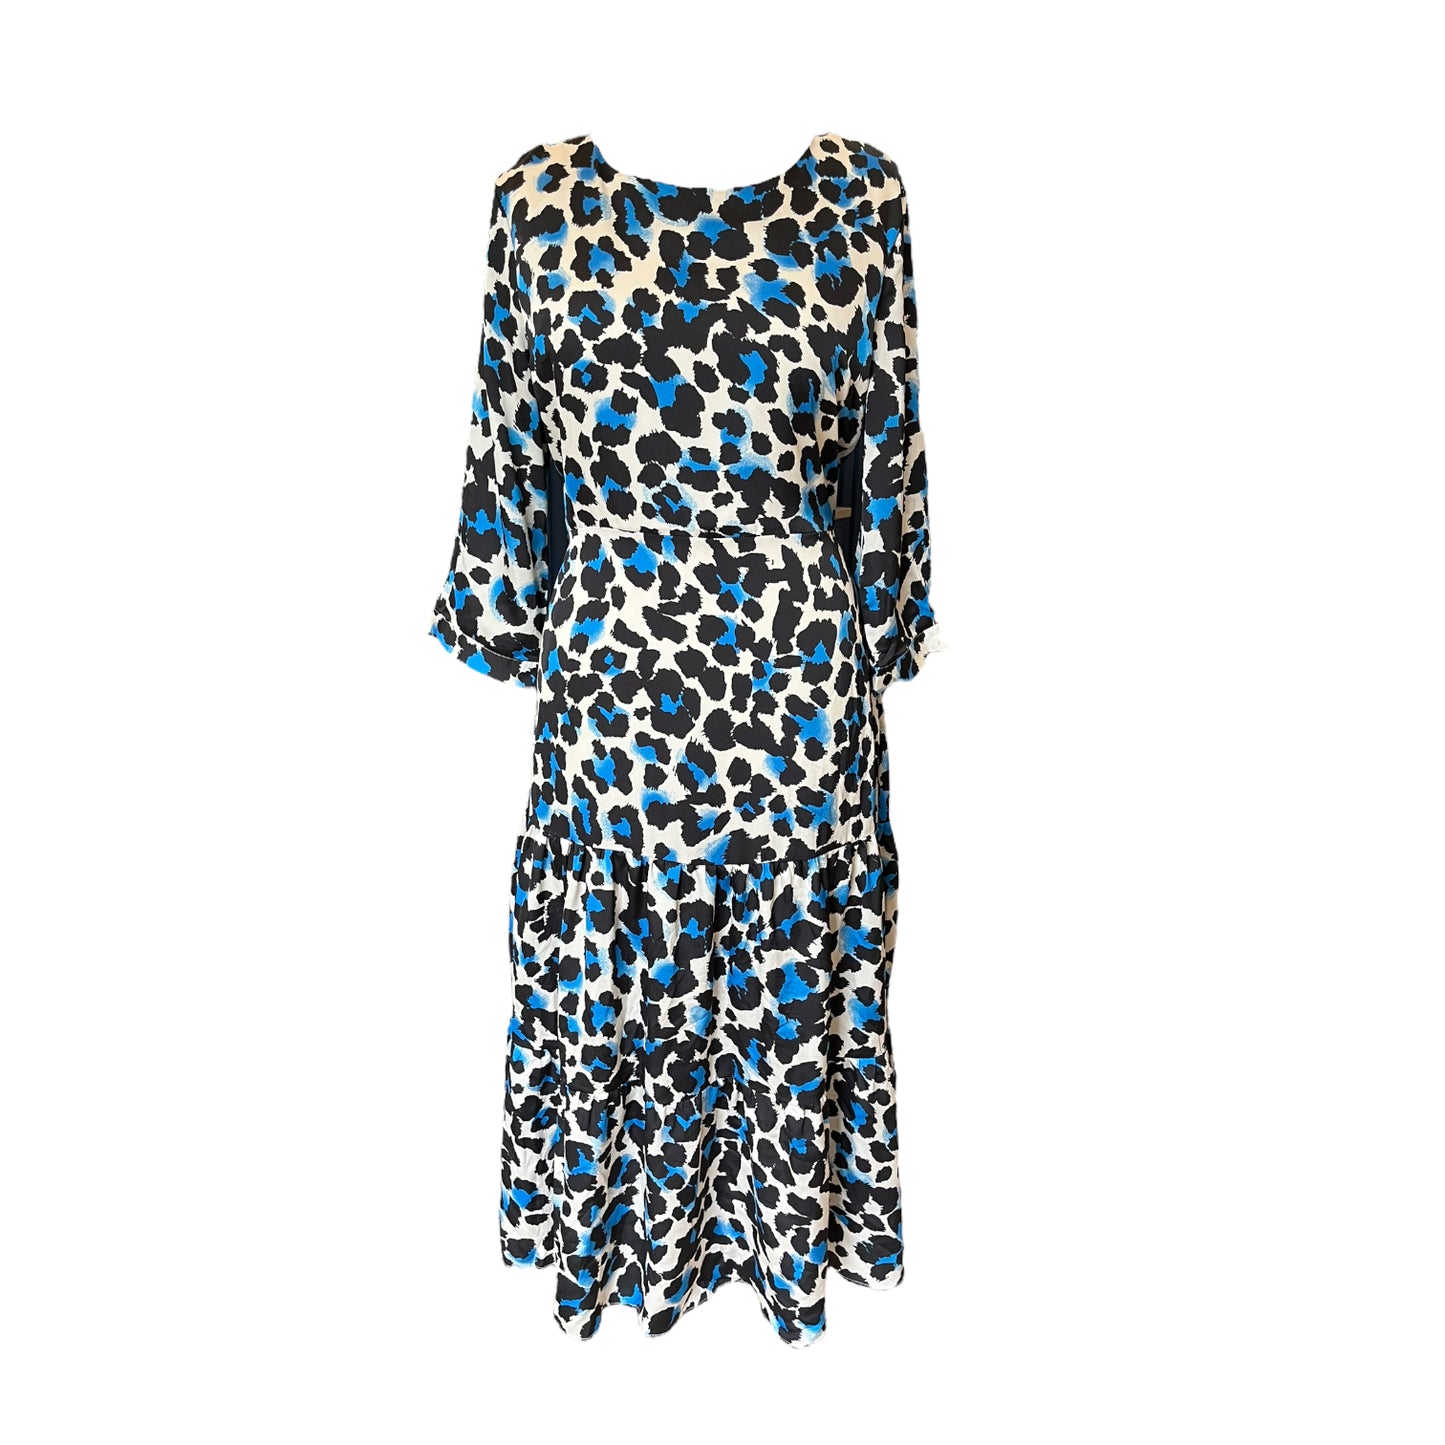 Marc Angelo Blue and Black Animal Print Dress